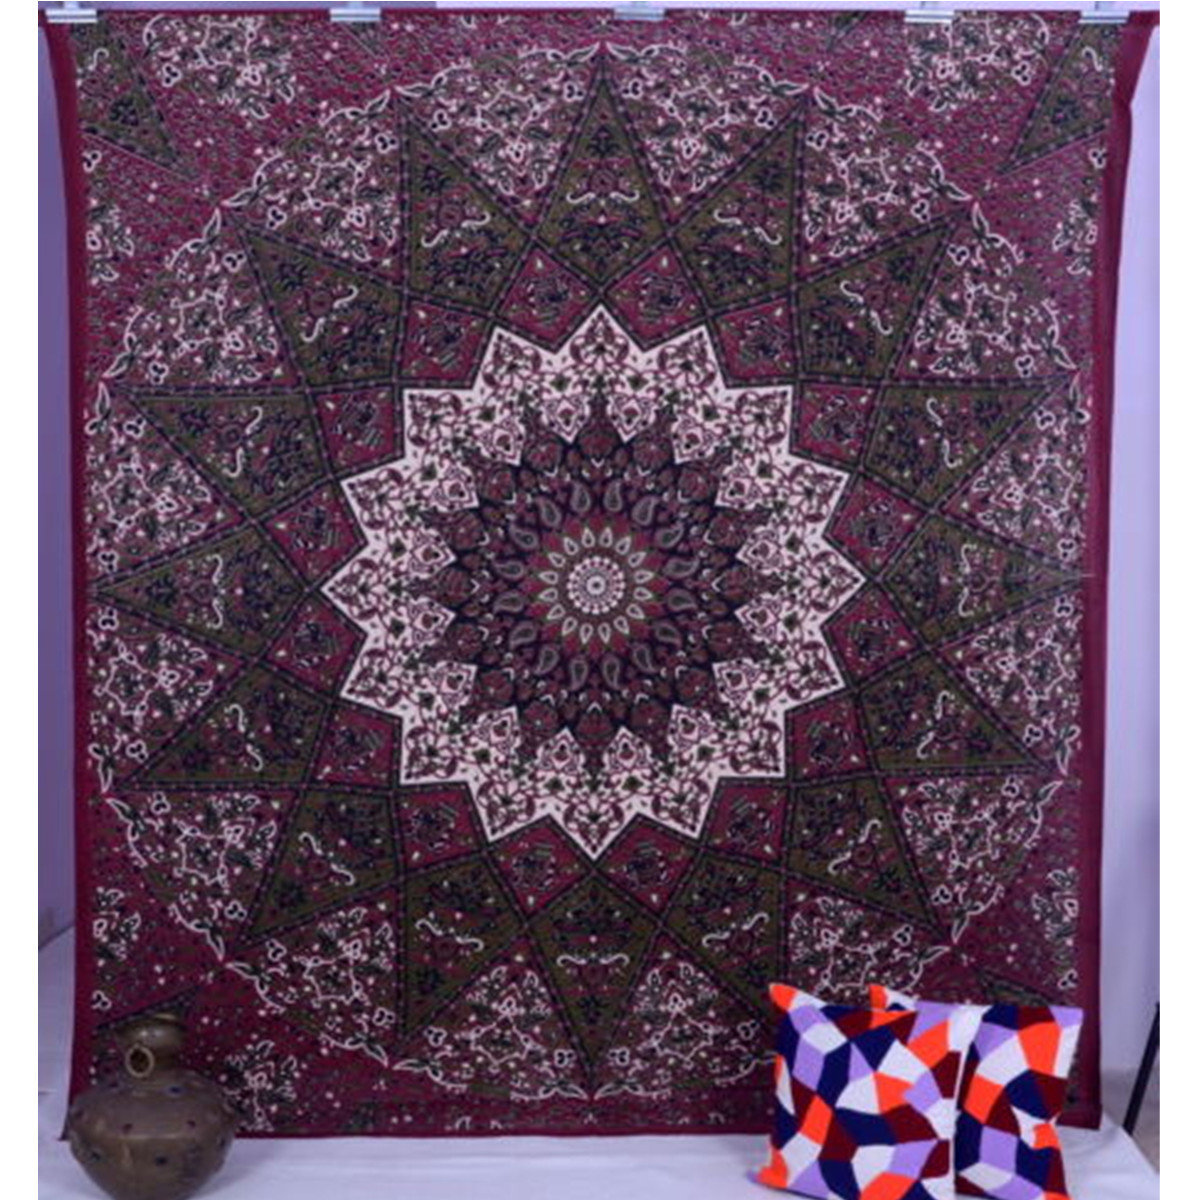 

Indian Mandala Tapestry Wall Hanging Blanket Throw Bohemian Dorm Bedspread Decoration